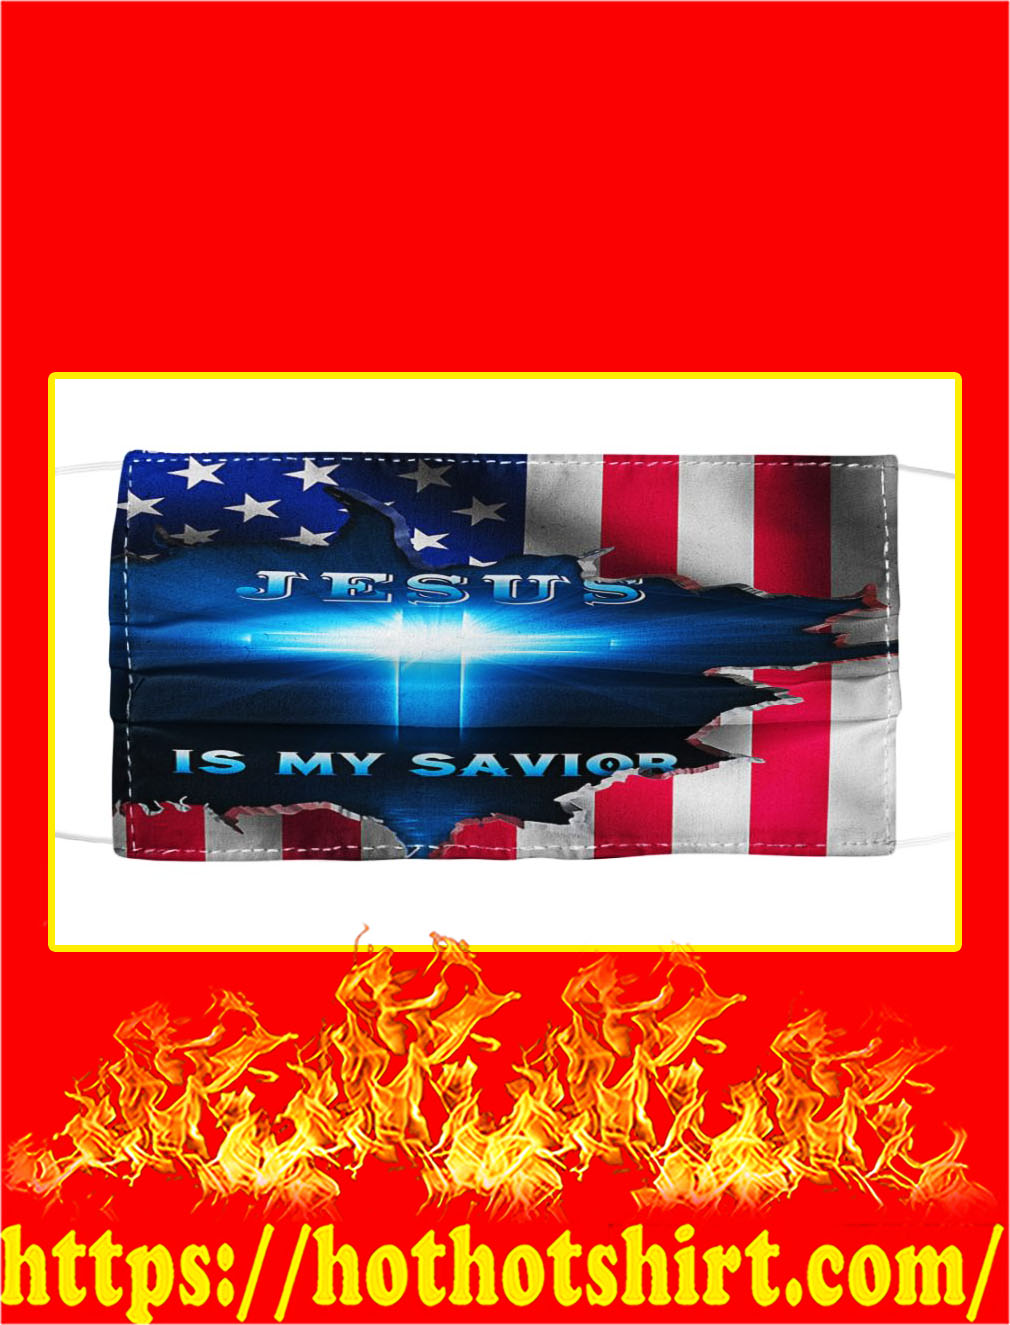 Jesus is my savior american flag face mask